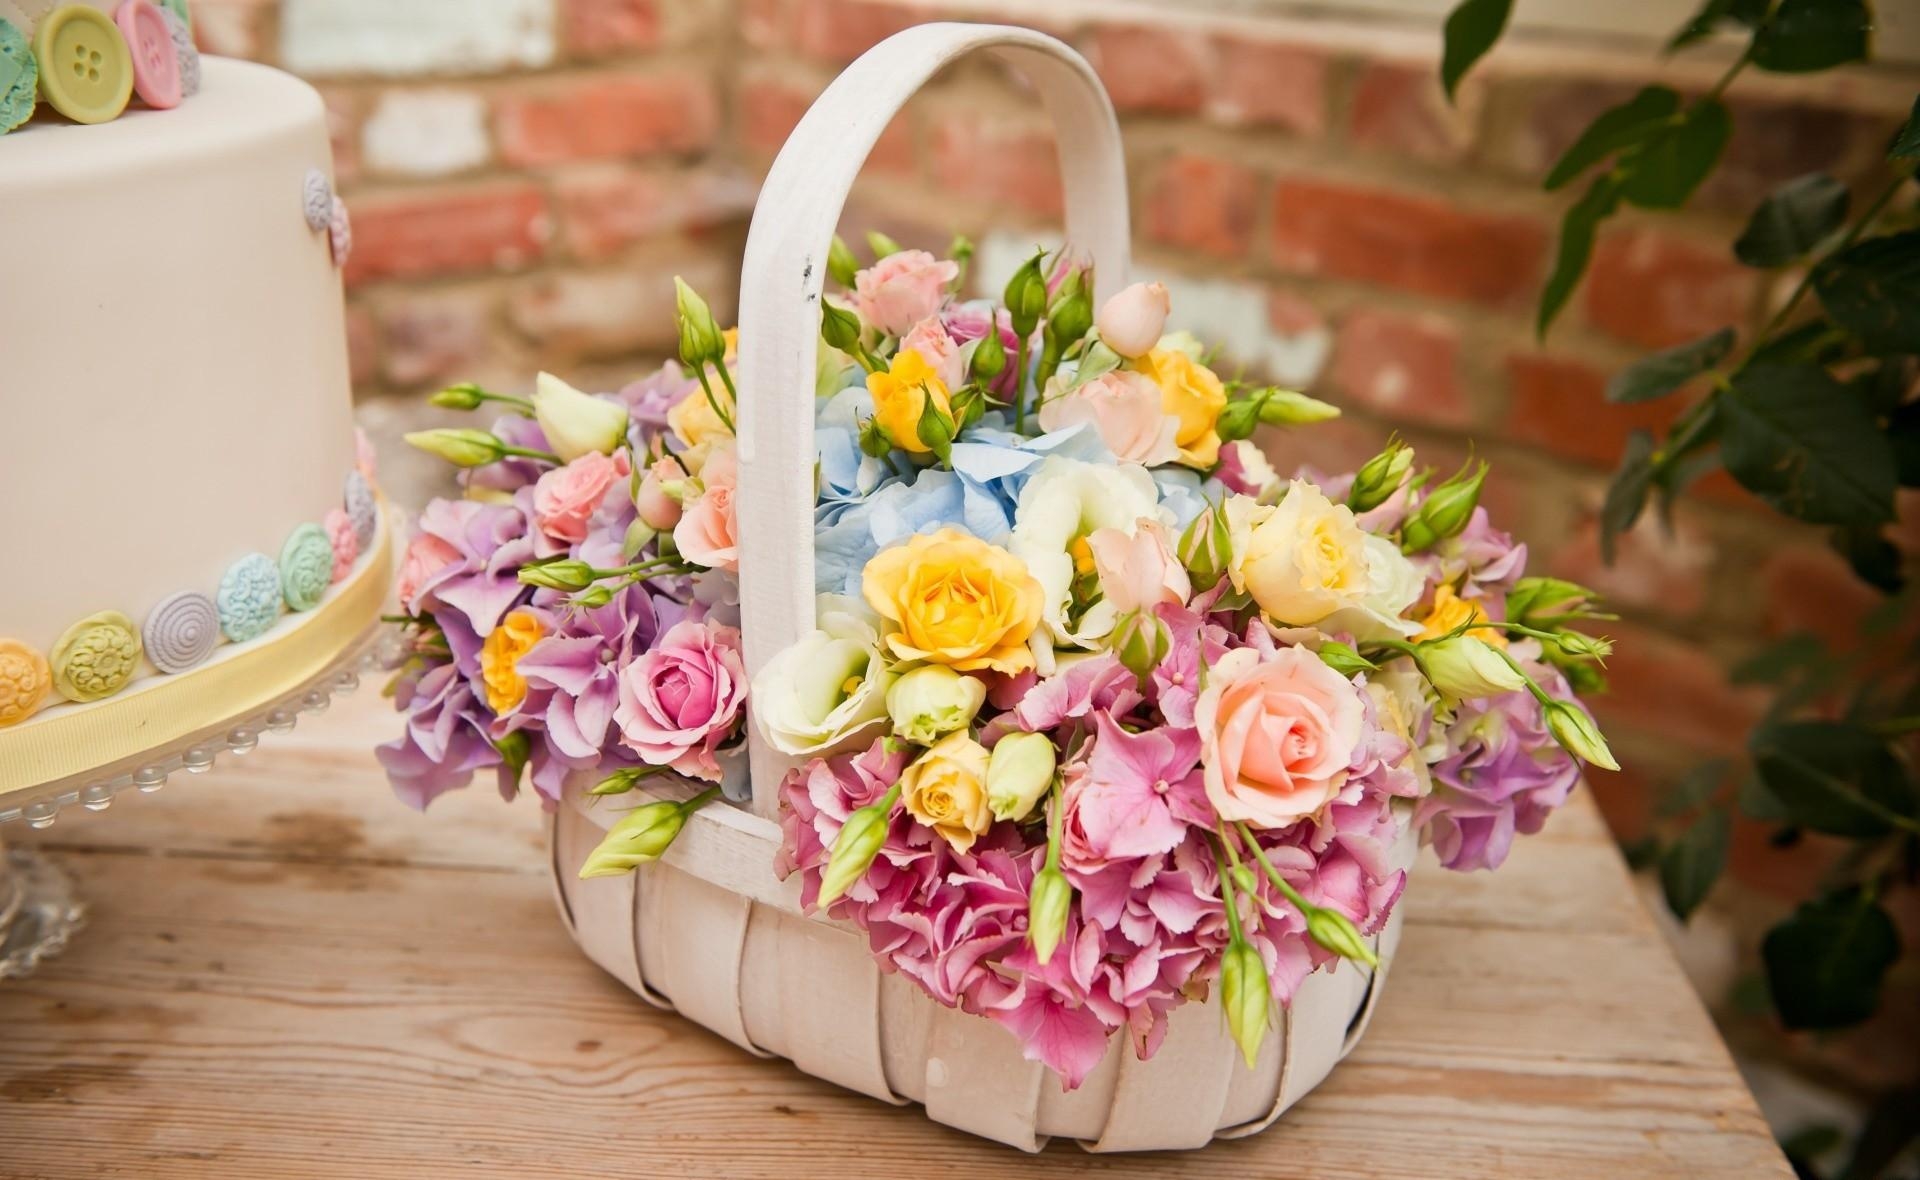 roses, flowers, table, basket, hydrangeas